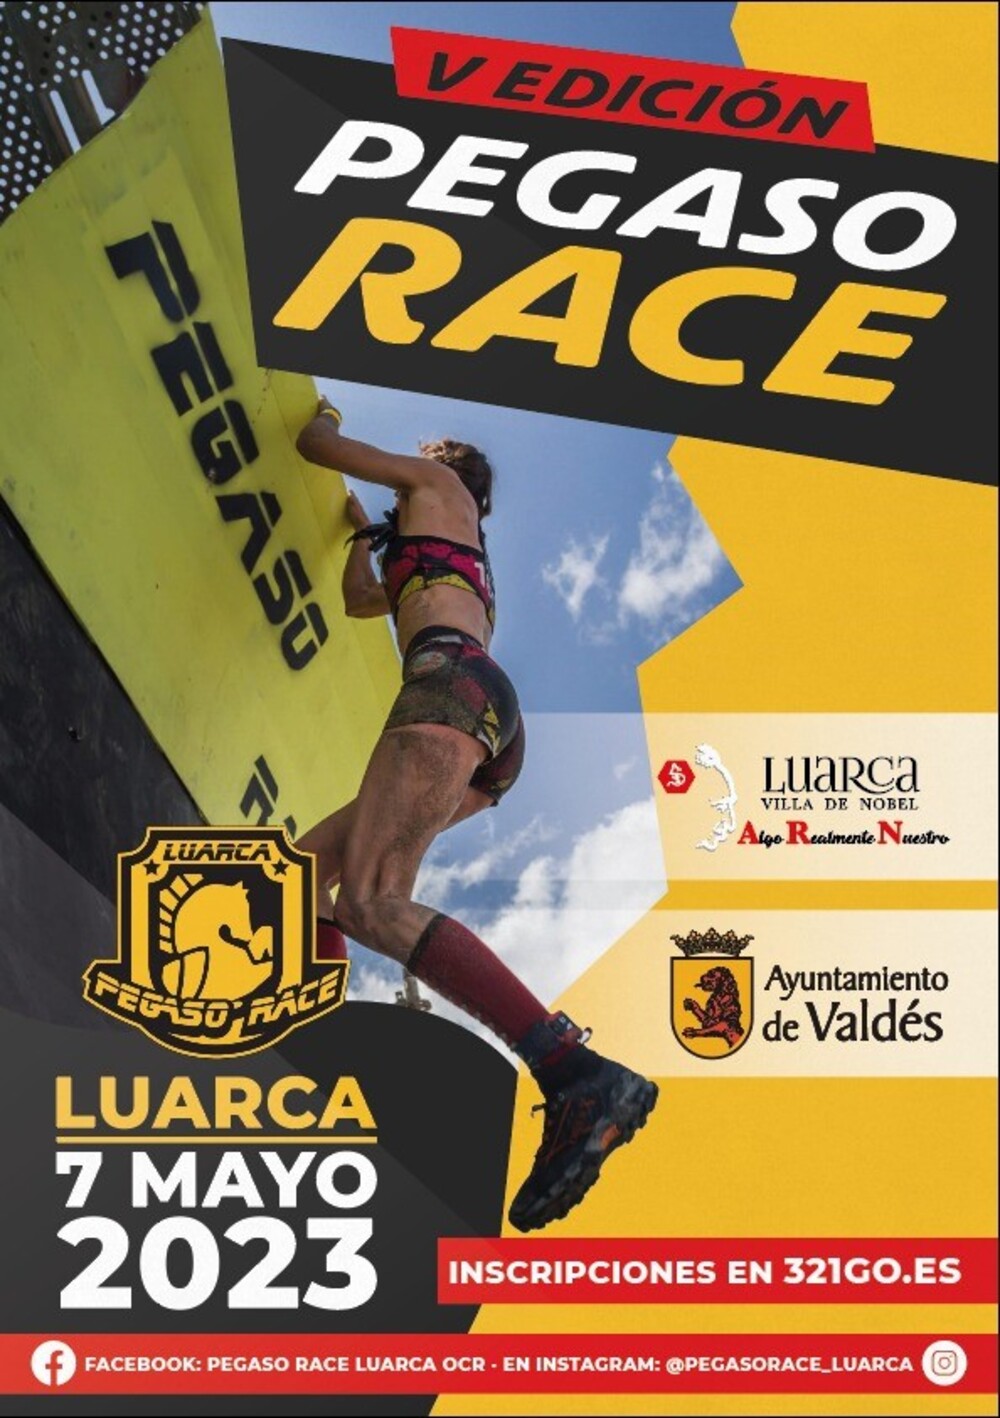 V Pegaso Race Luarca